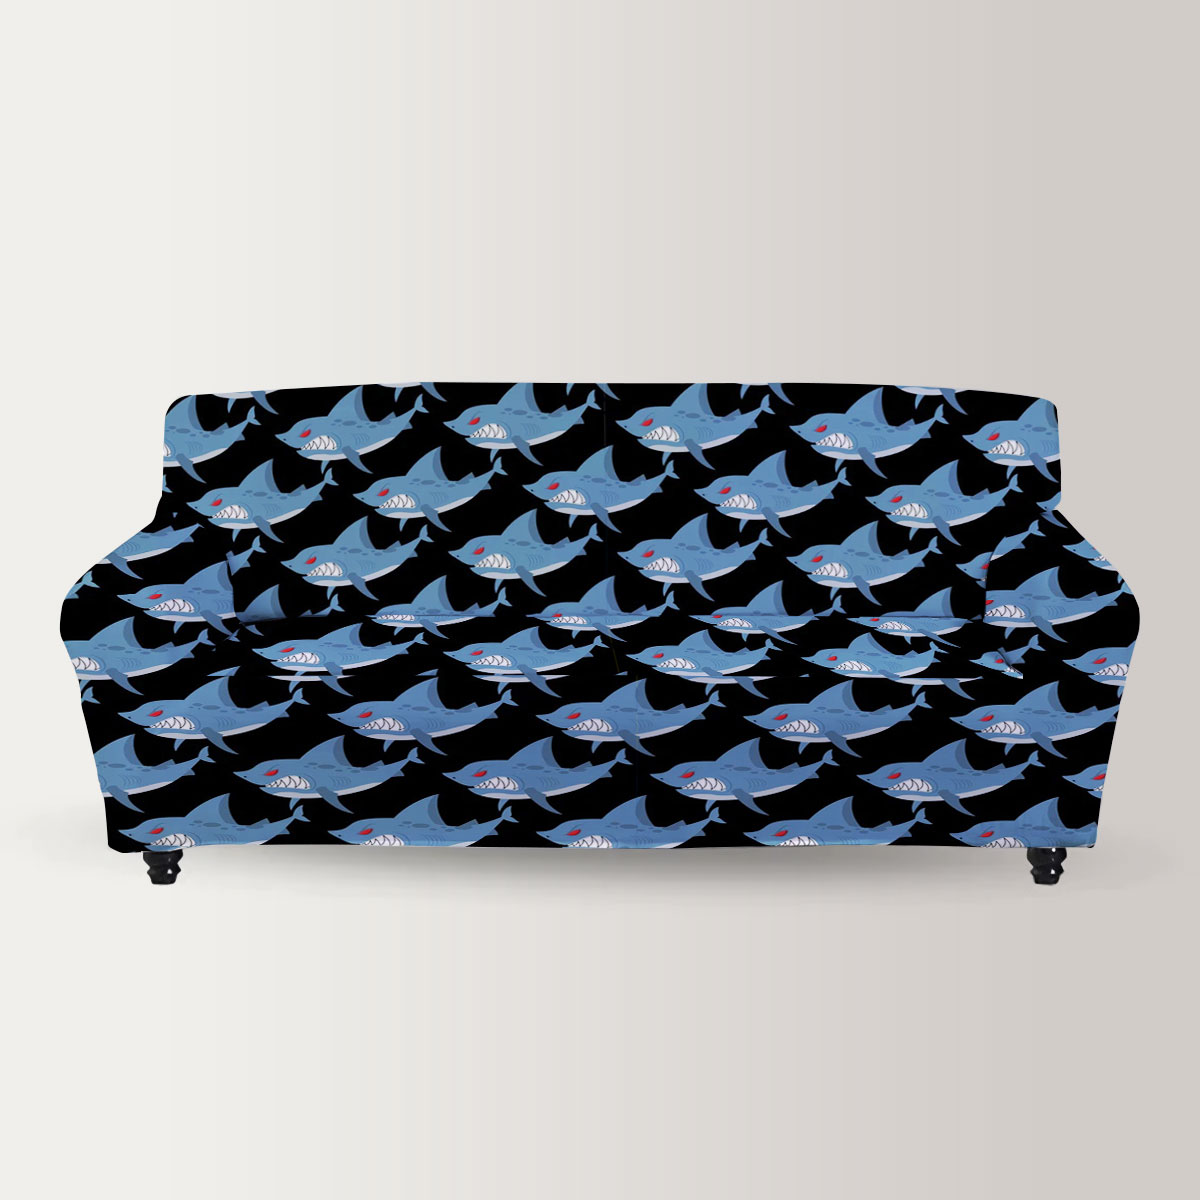 Ferocious Great White Shark Sofa Cover